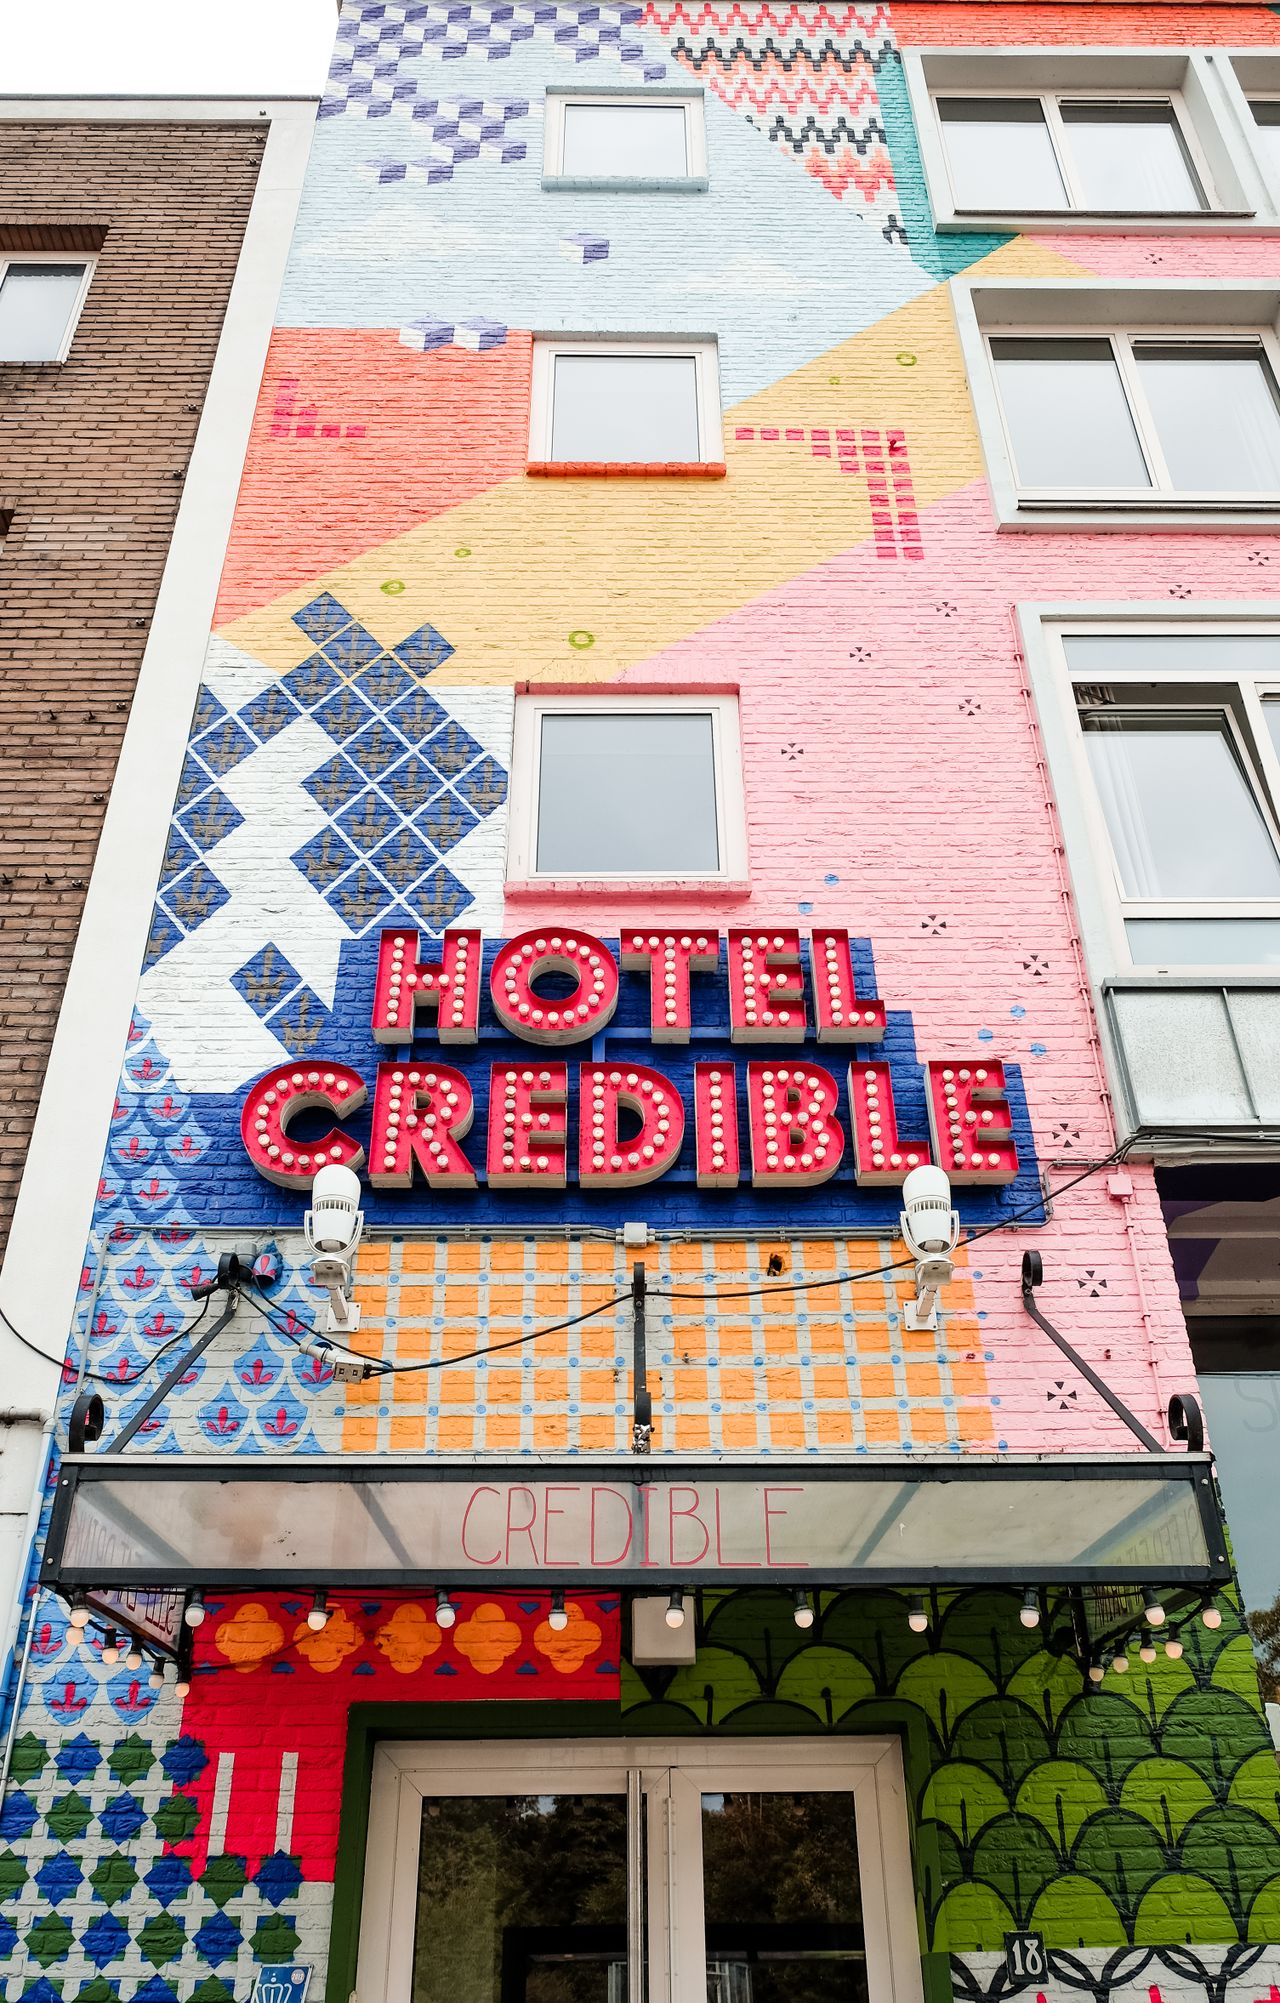 Hotel Credible